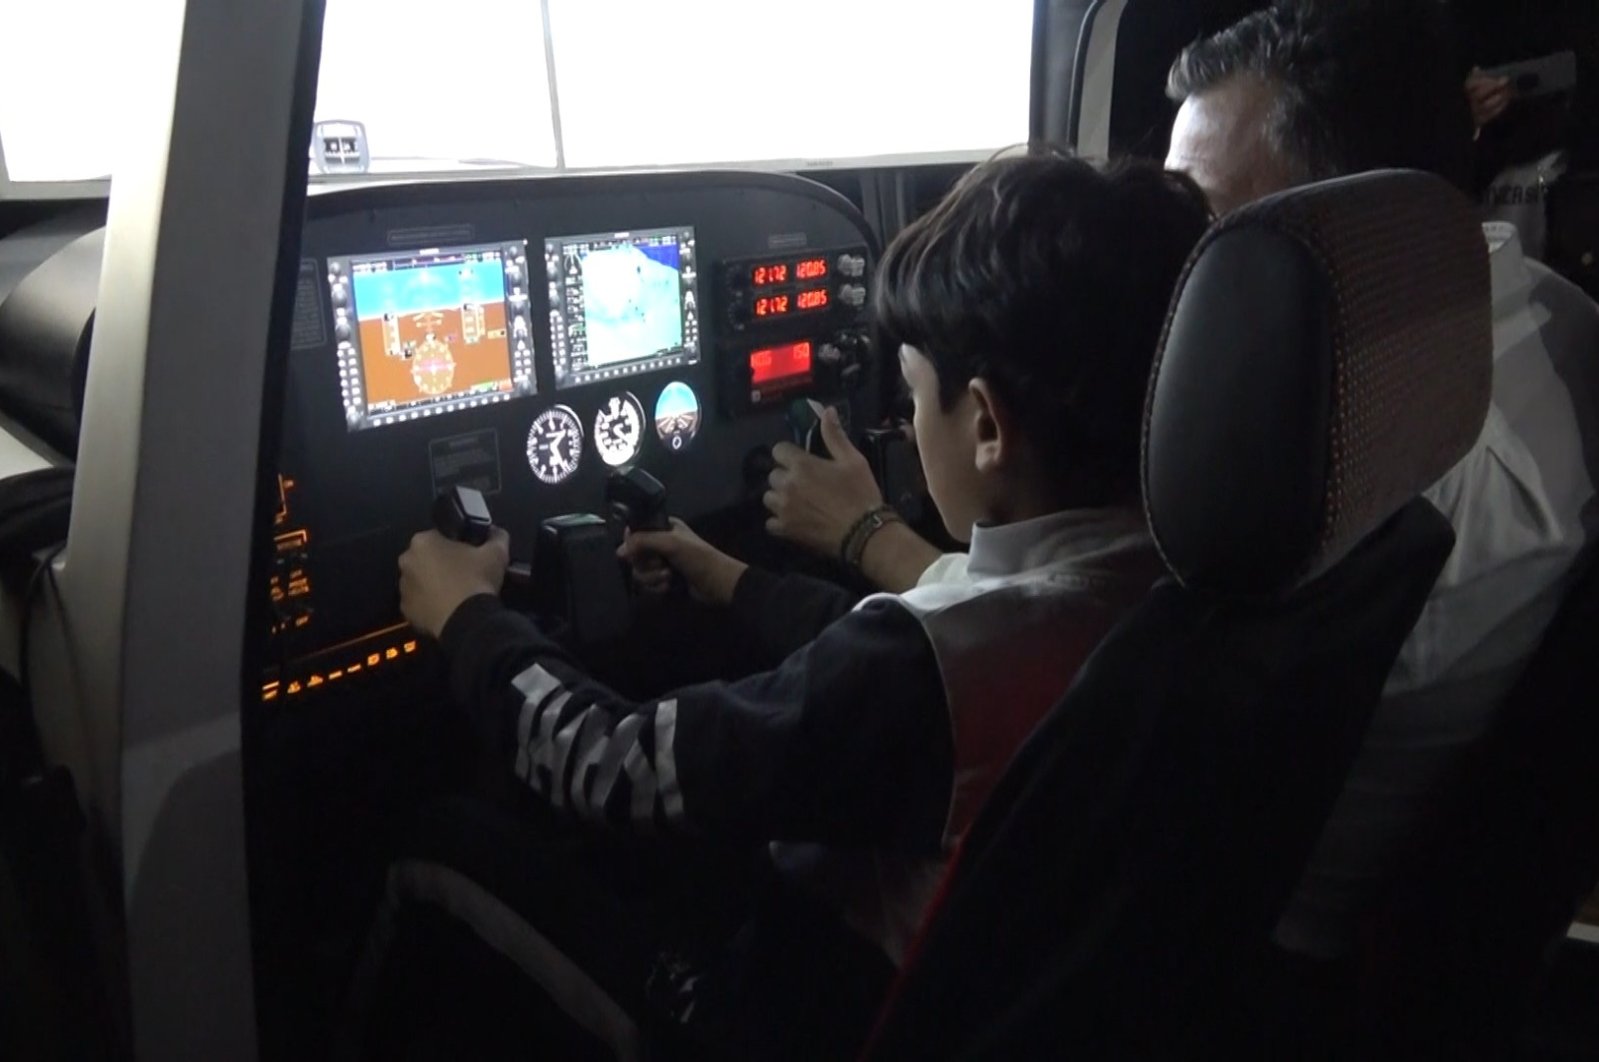 The municipality of Yalova province organized simulator-based flying lessons for children aged between 12 and 18, Yalova, Türkiye, Oct. 22, 2022. (IHA Photo)